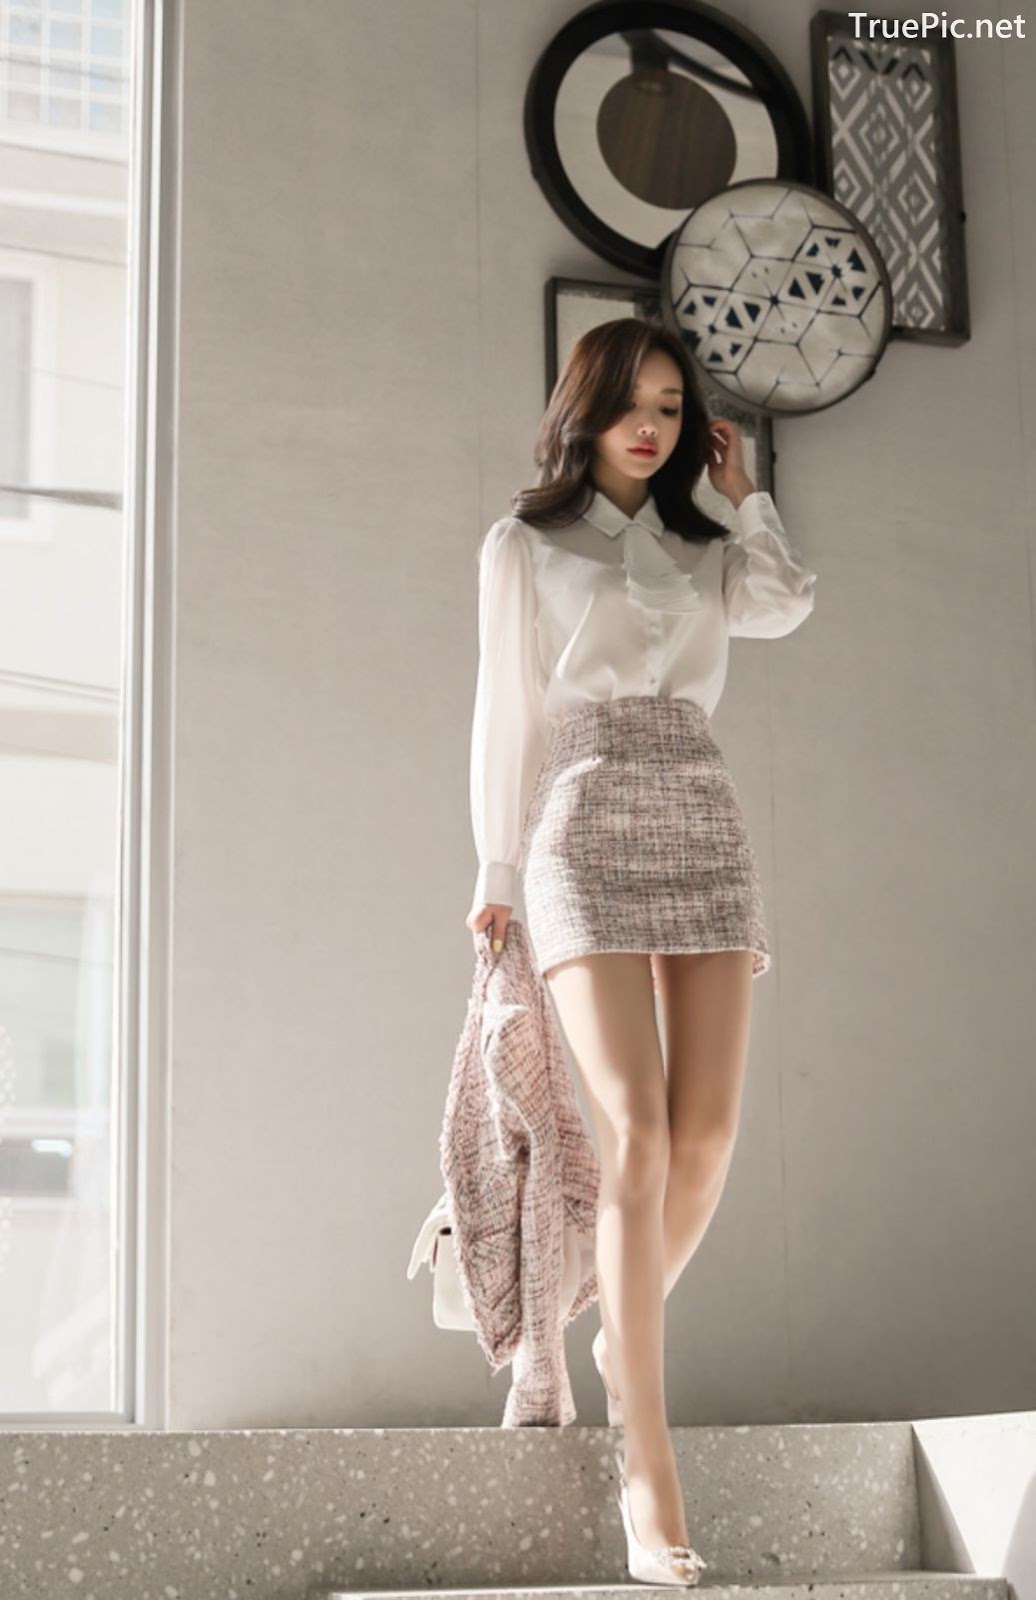 Image-Hot-Korean-Fashion-Model-Son-Yoon-Joo-She-So-Lovely-With-Miniskirt-TruePic.net- Picture-16